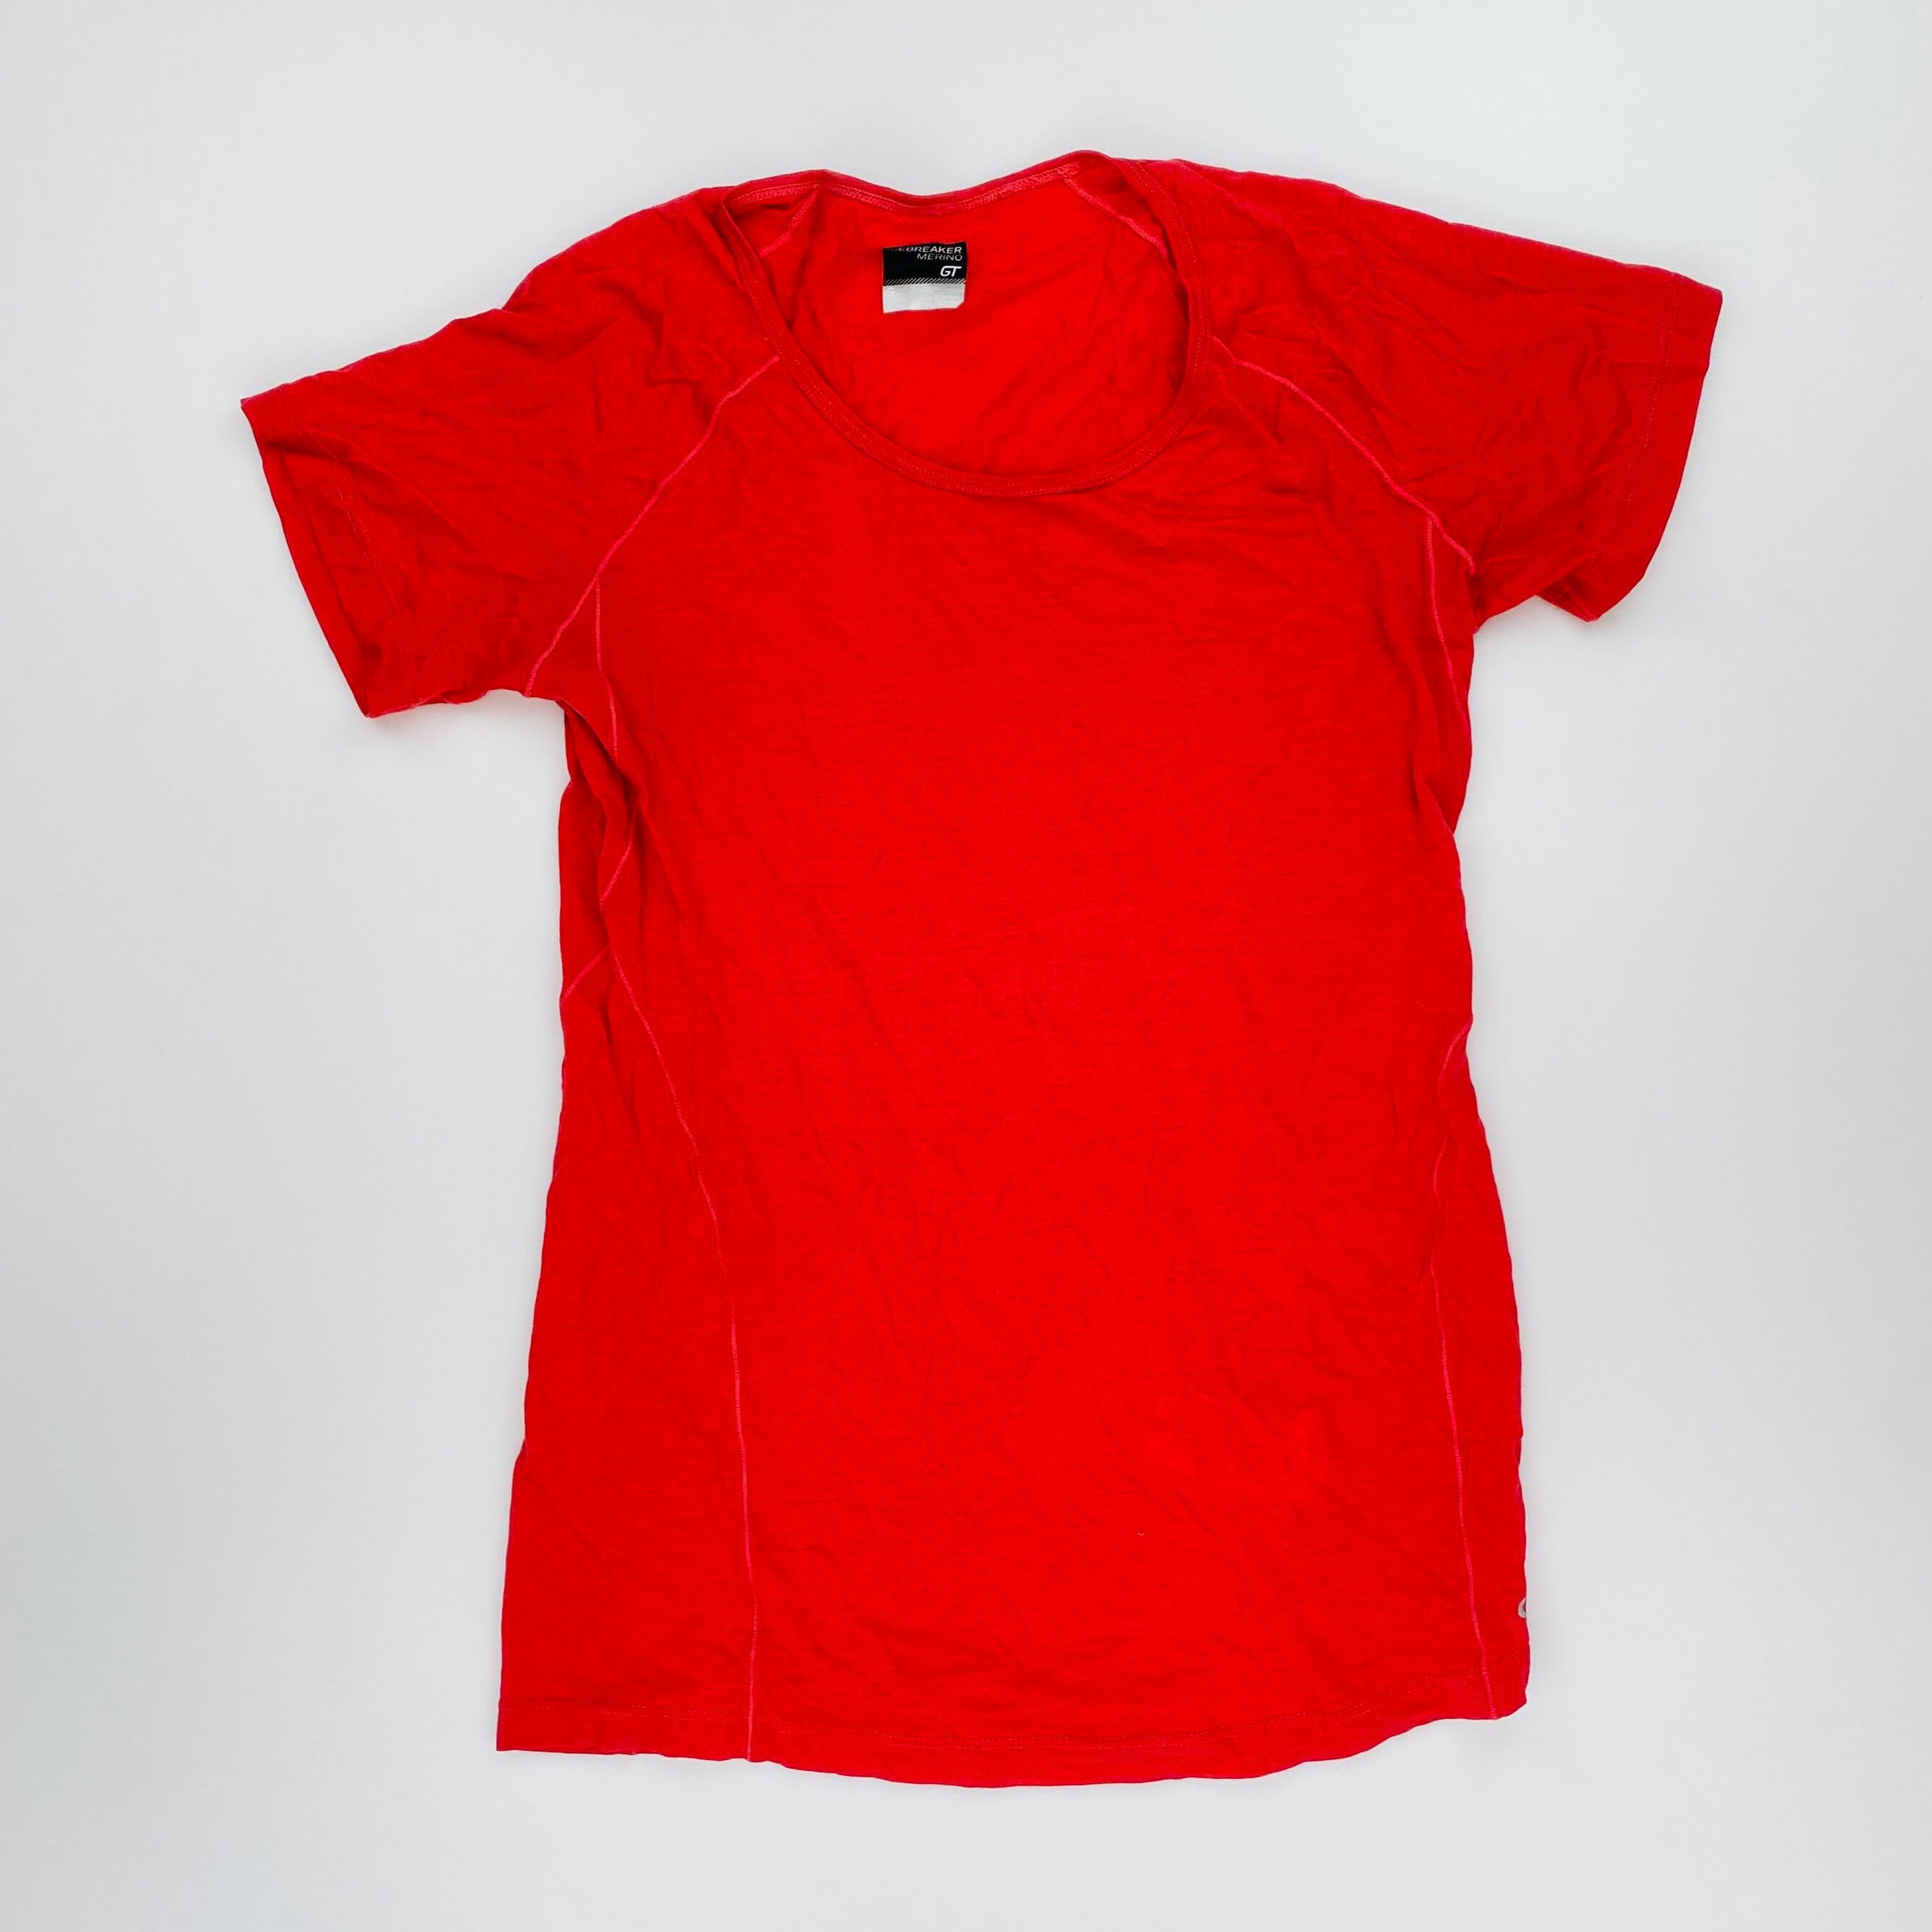 Icebreaker Merino Gt - Seconde main T-shirt femme - Rose - S | Hardloop